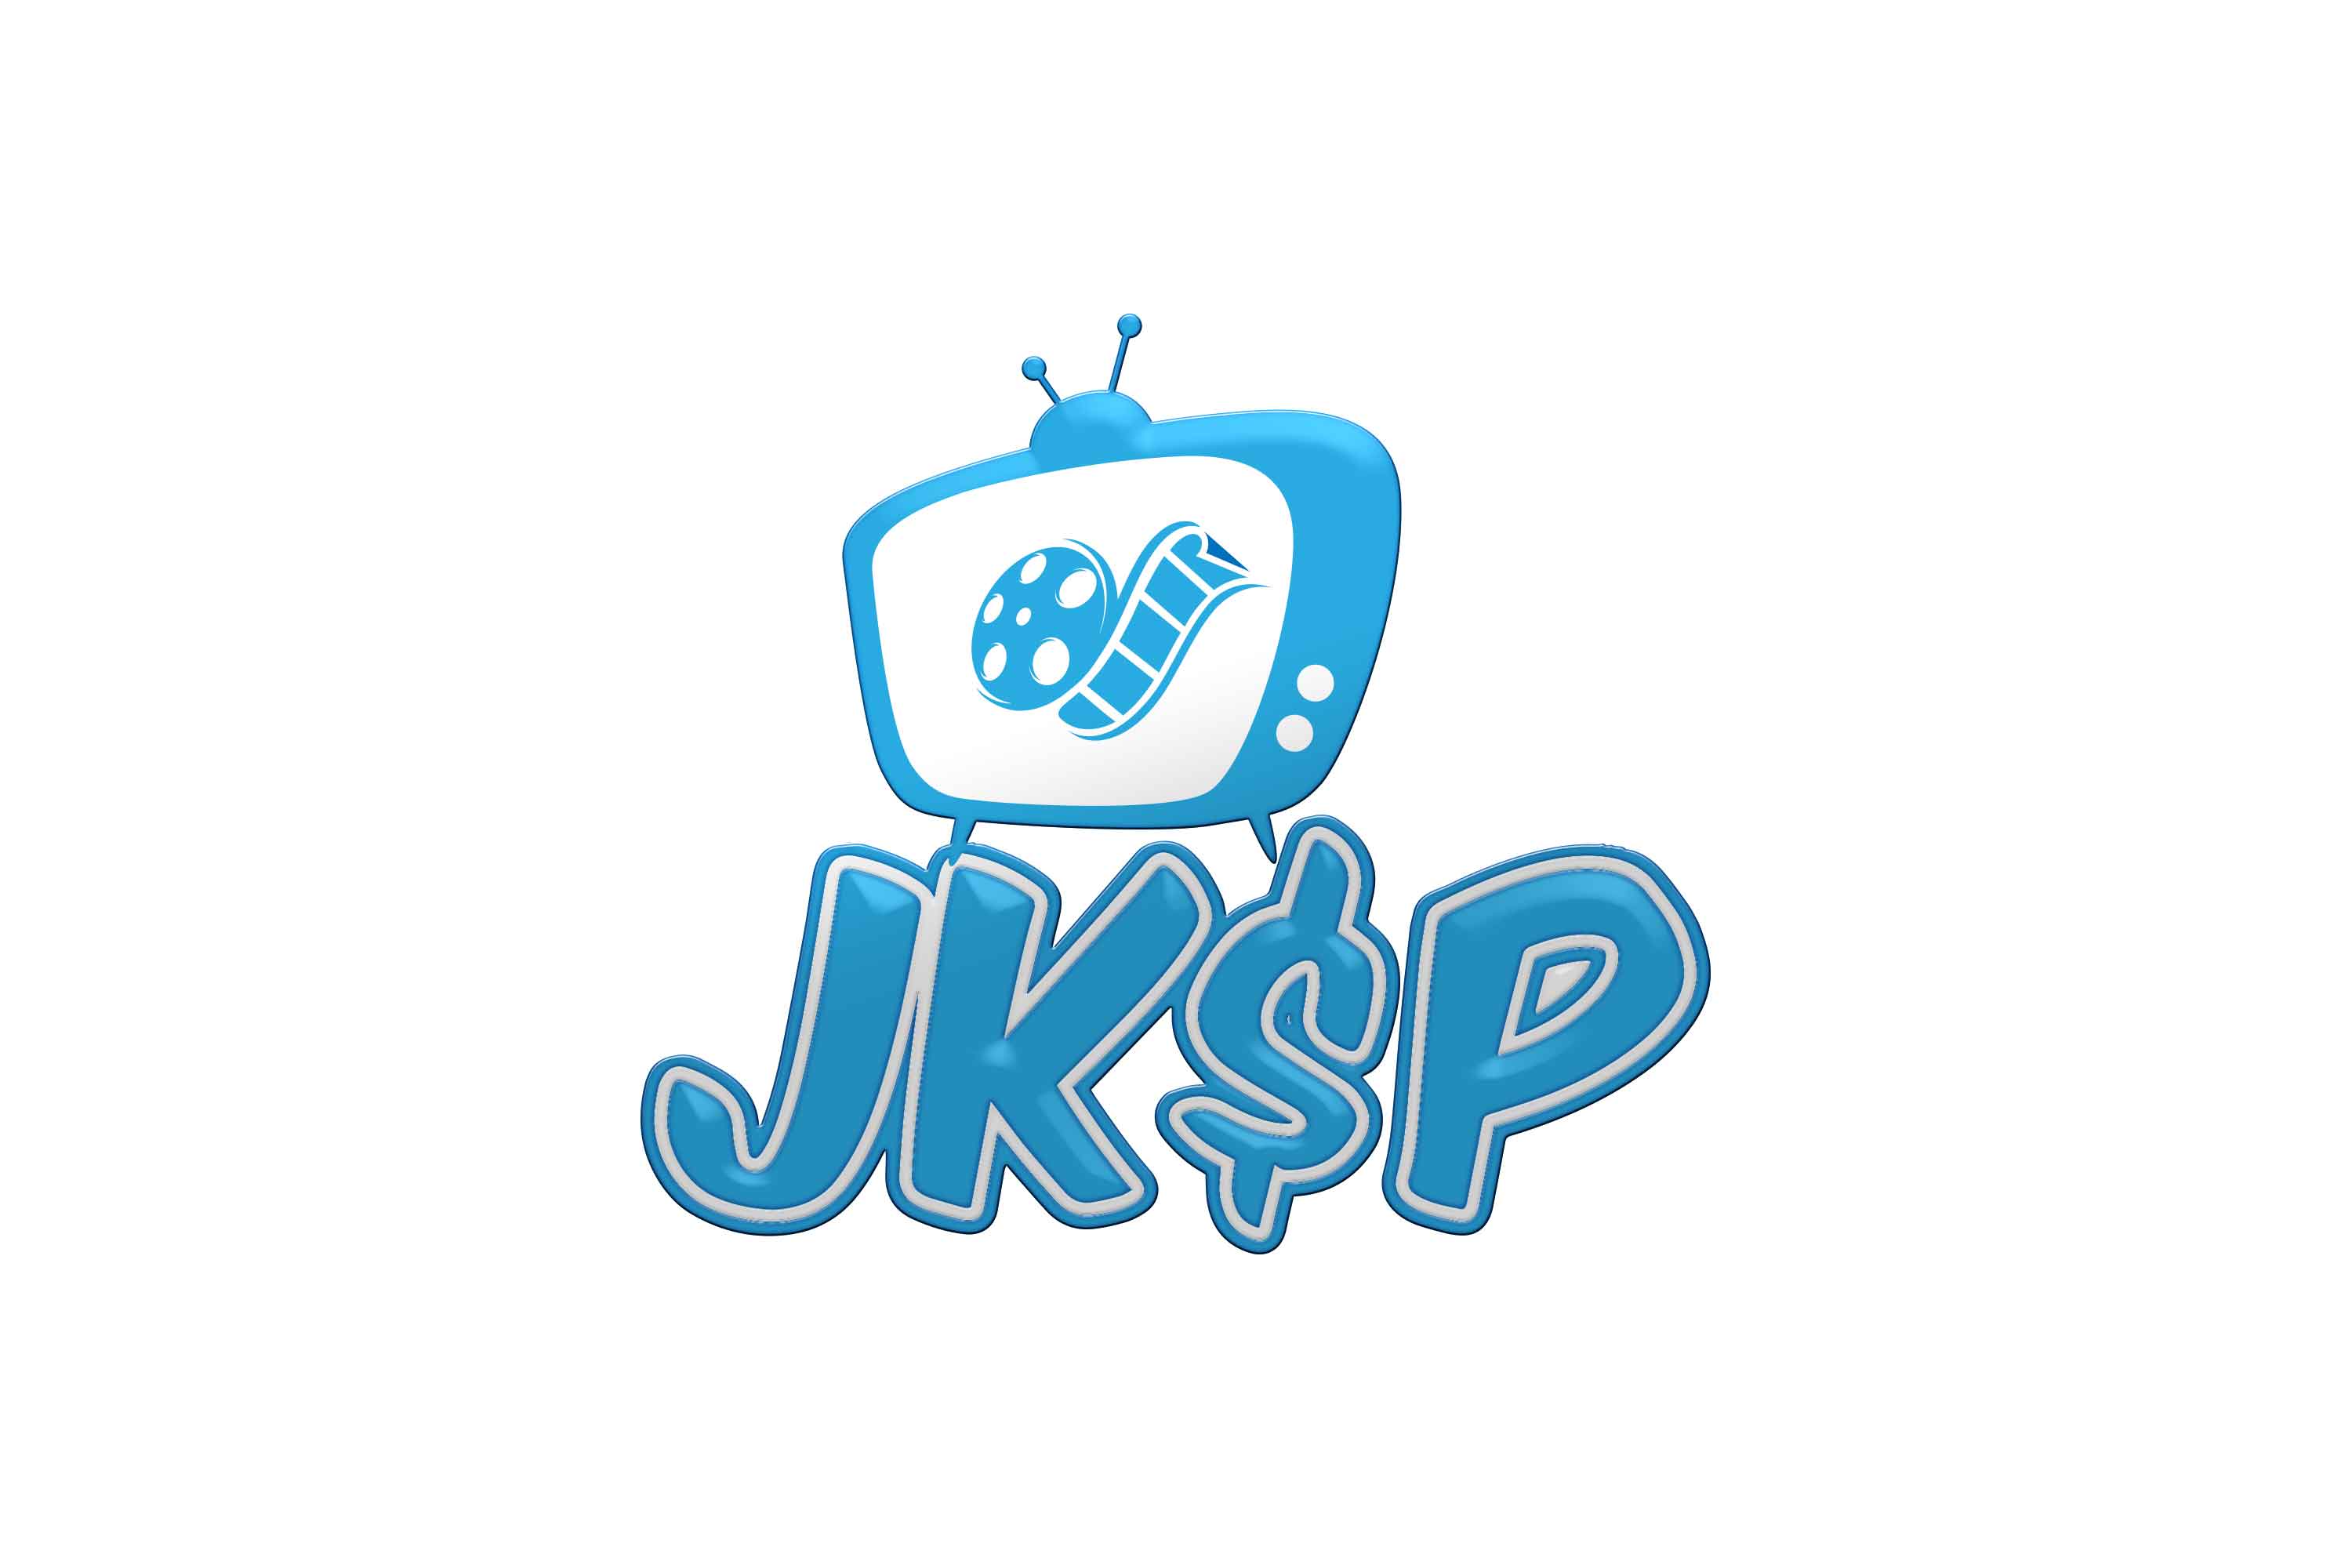 Logo of Jk$p repository